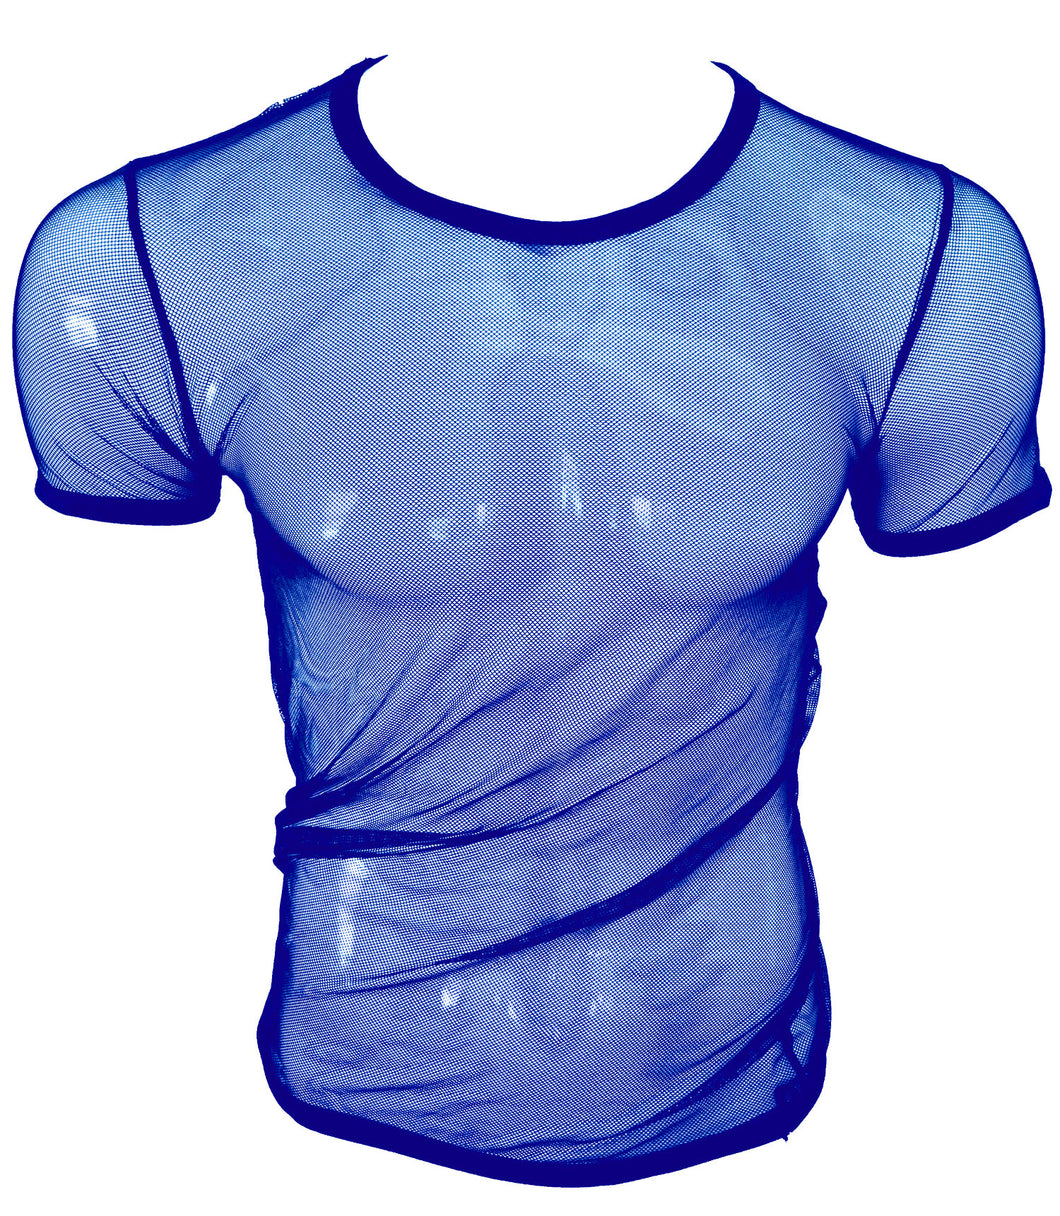 Fine Mesh - Fishnet See Through Sexy Men's Tee T-shirt - ROYAL BLUE